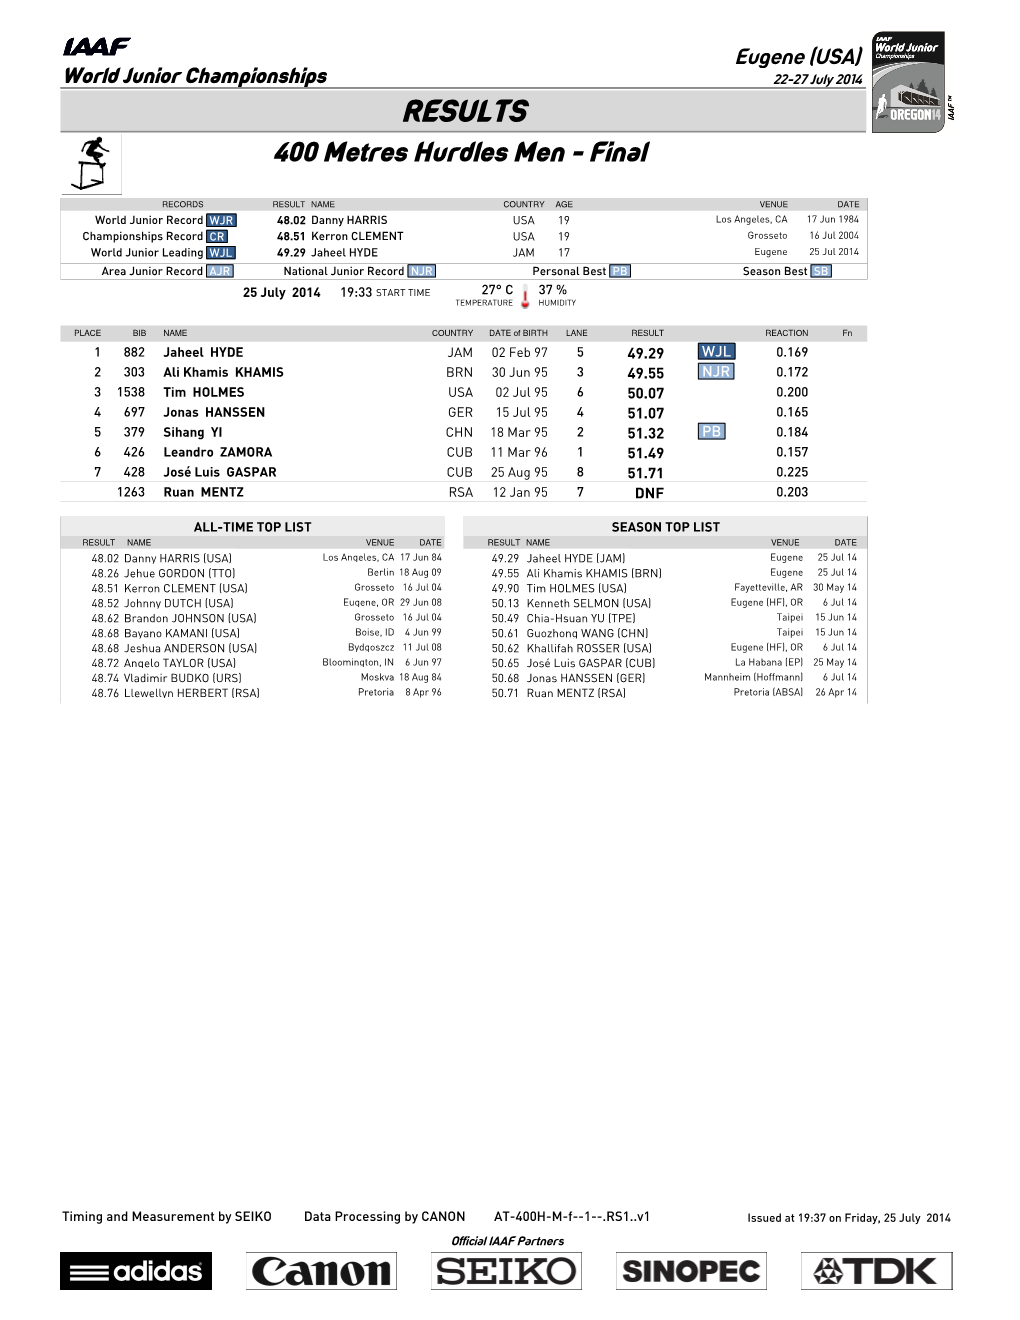 RESULTS 400 Metres Hurdles Men - Final